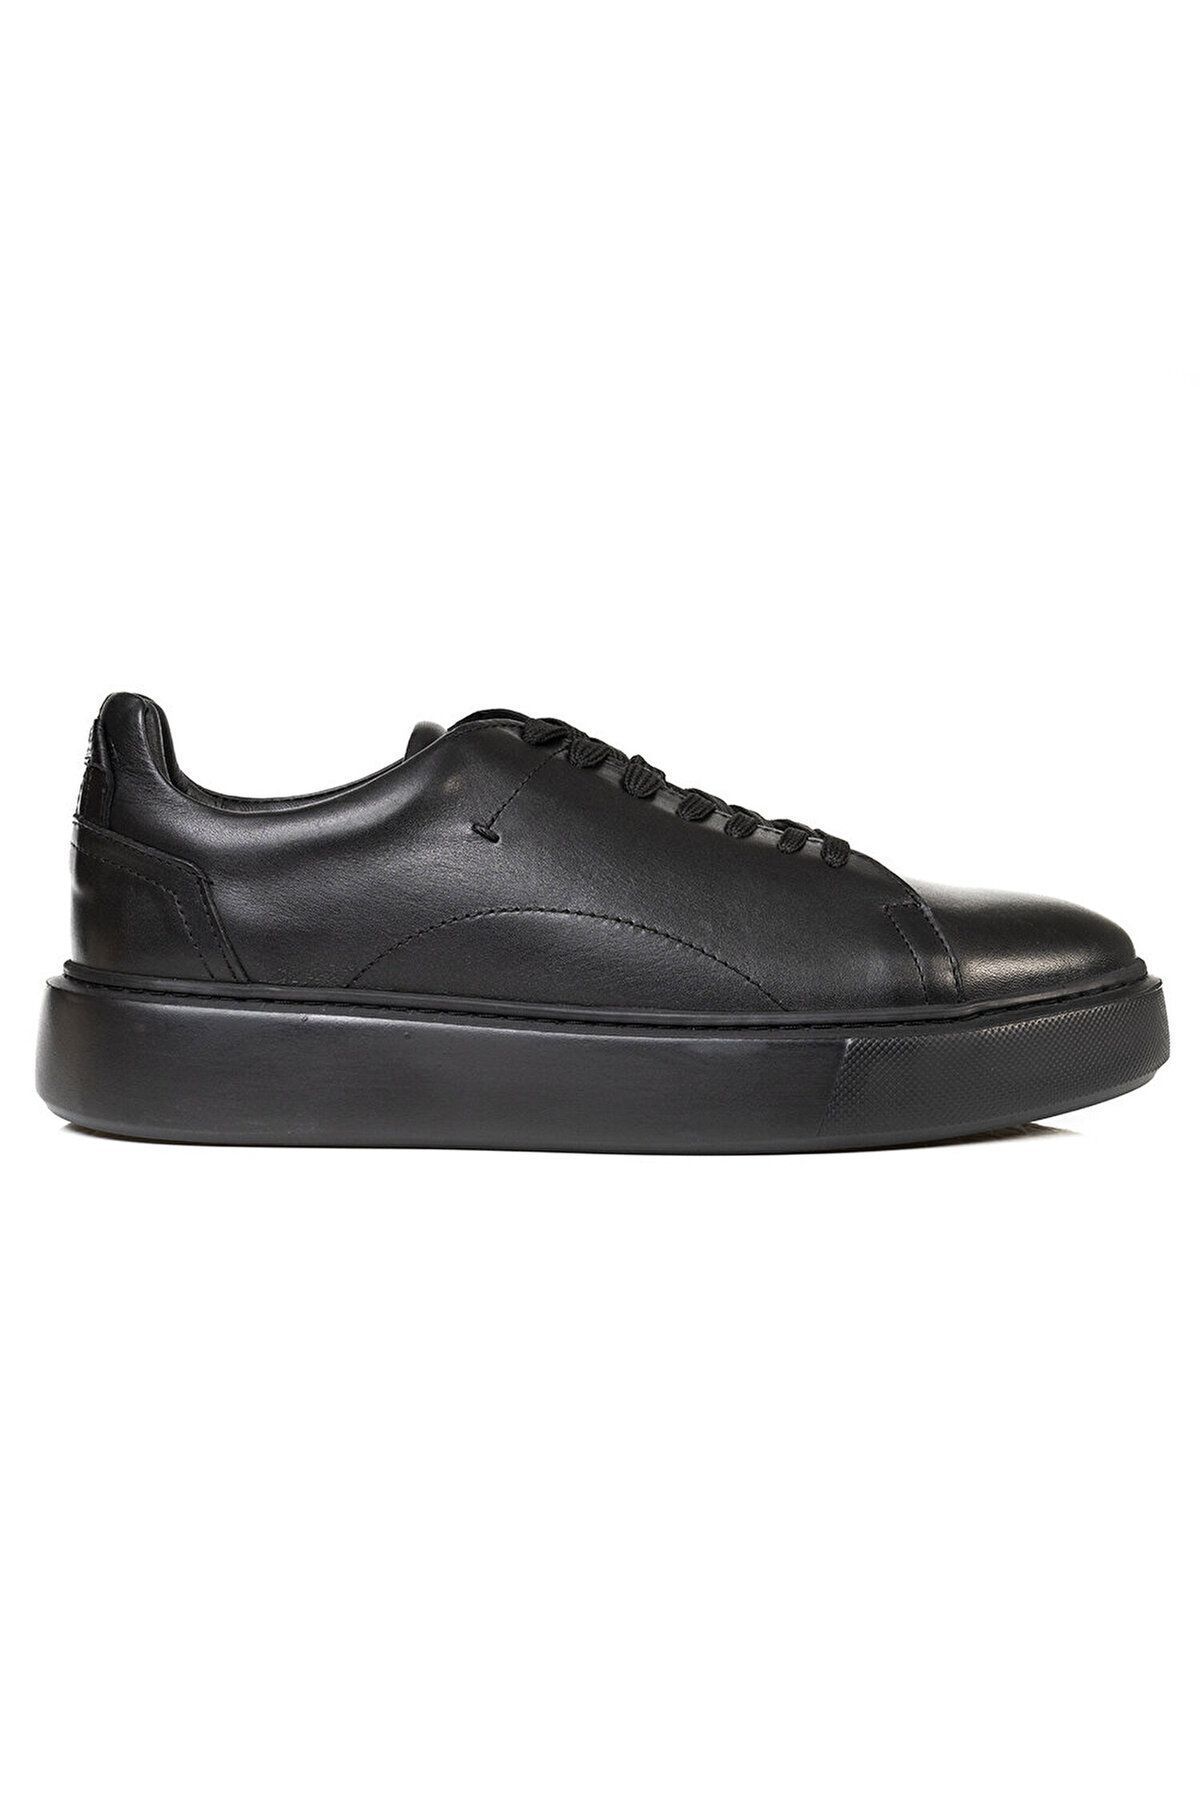 Greyder Erkek Siyah Hakiki Deri Sneaker Ayakkabı 3k1sa75162